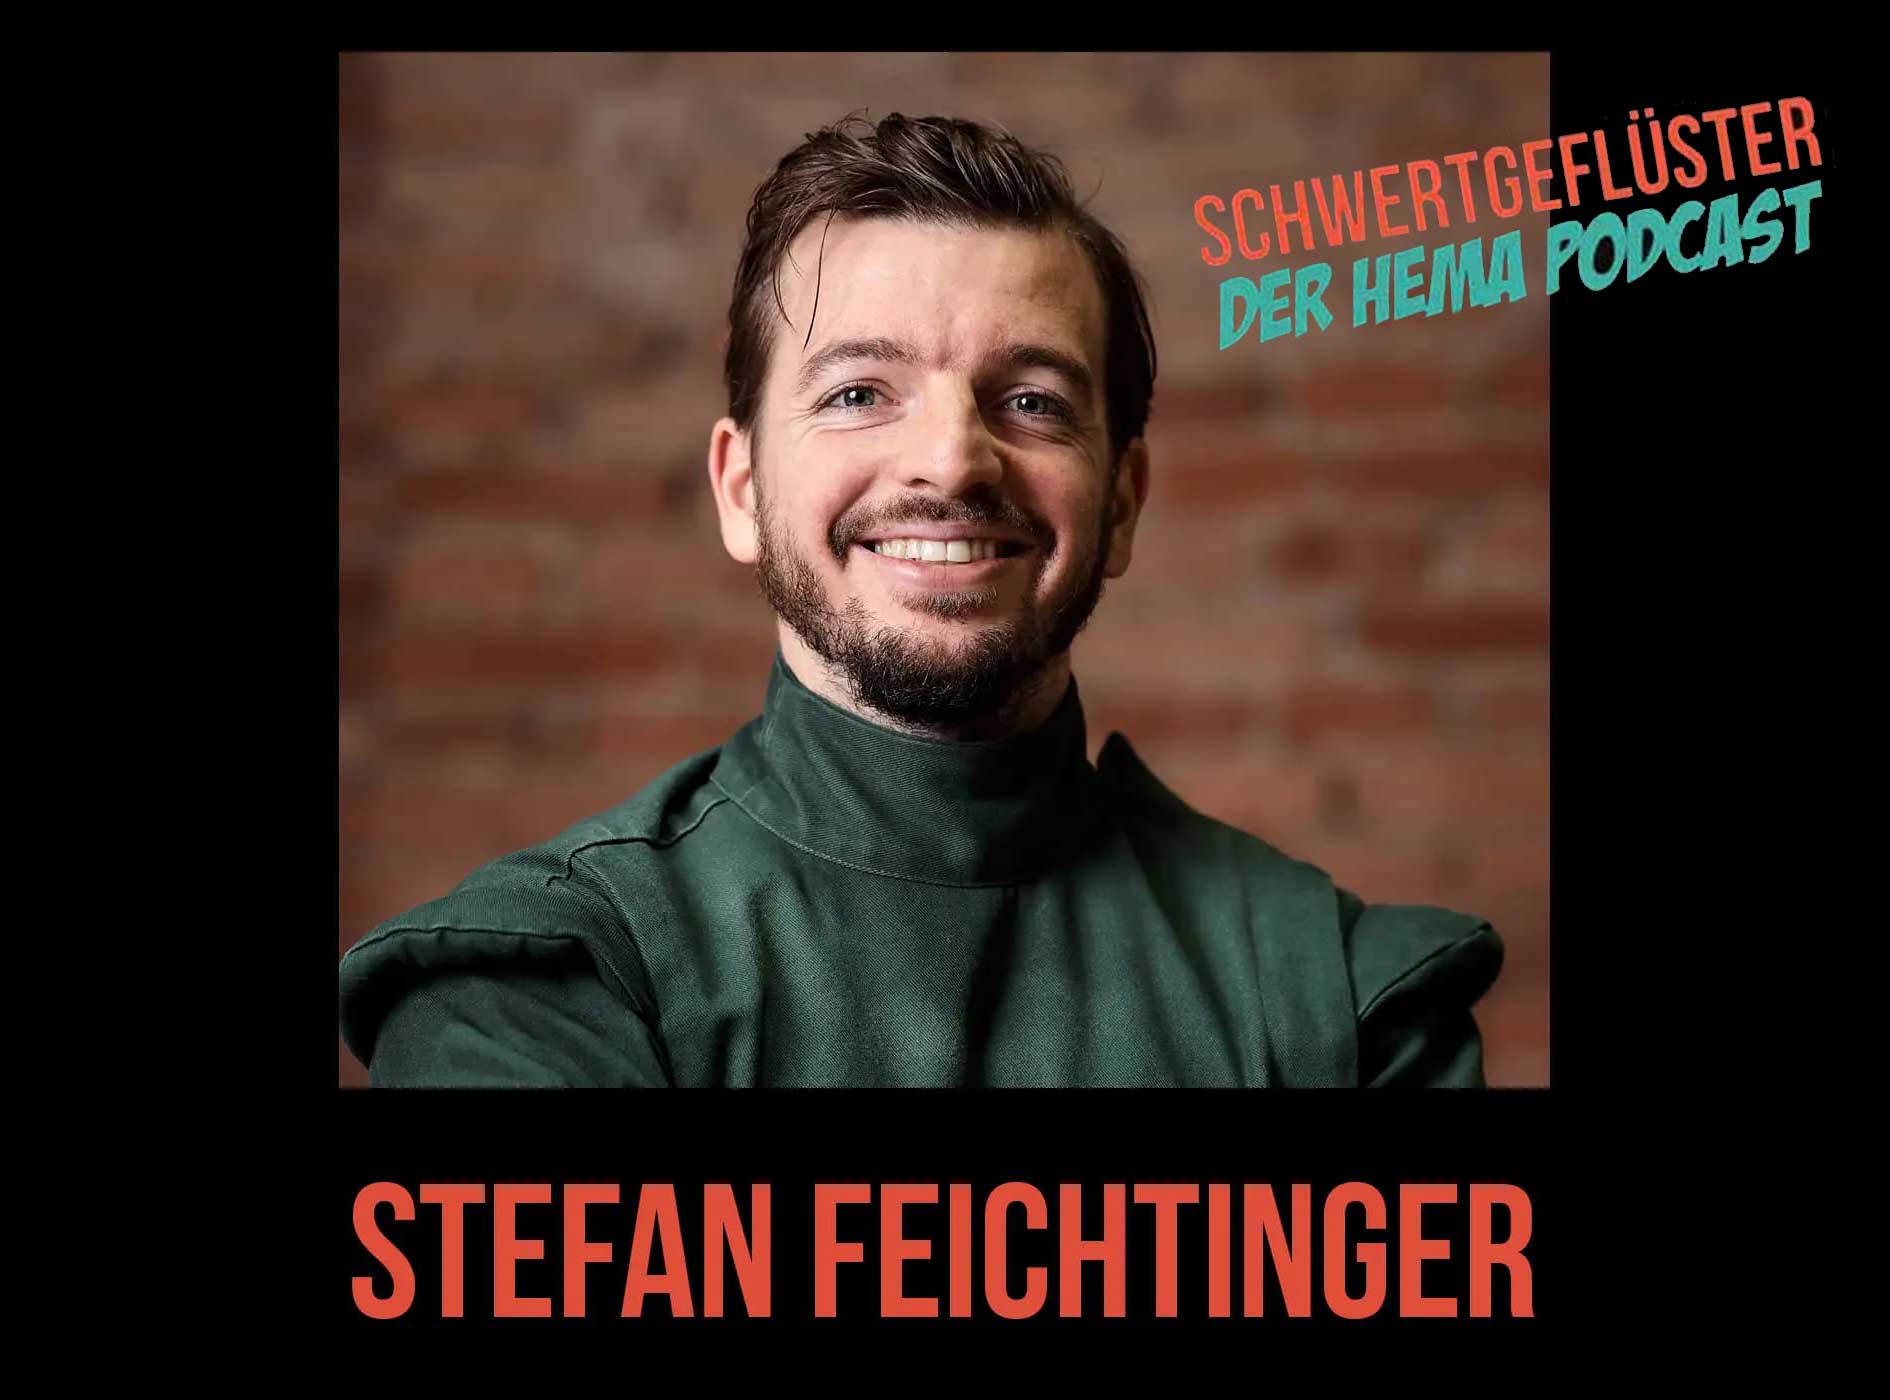 Podcast Stefan Schwertgeflüster (only in German)